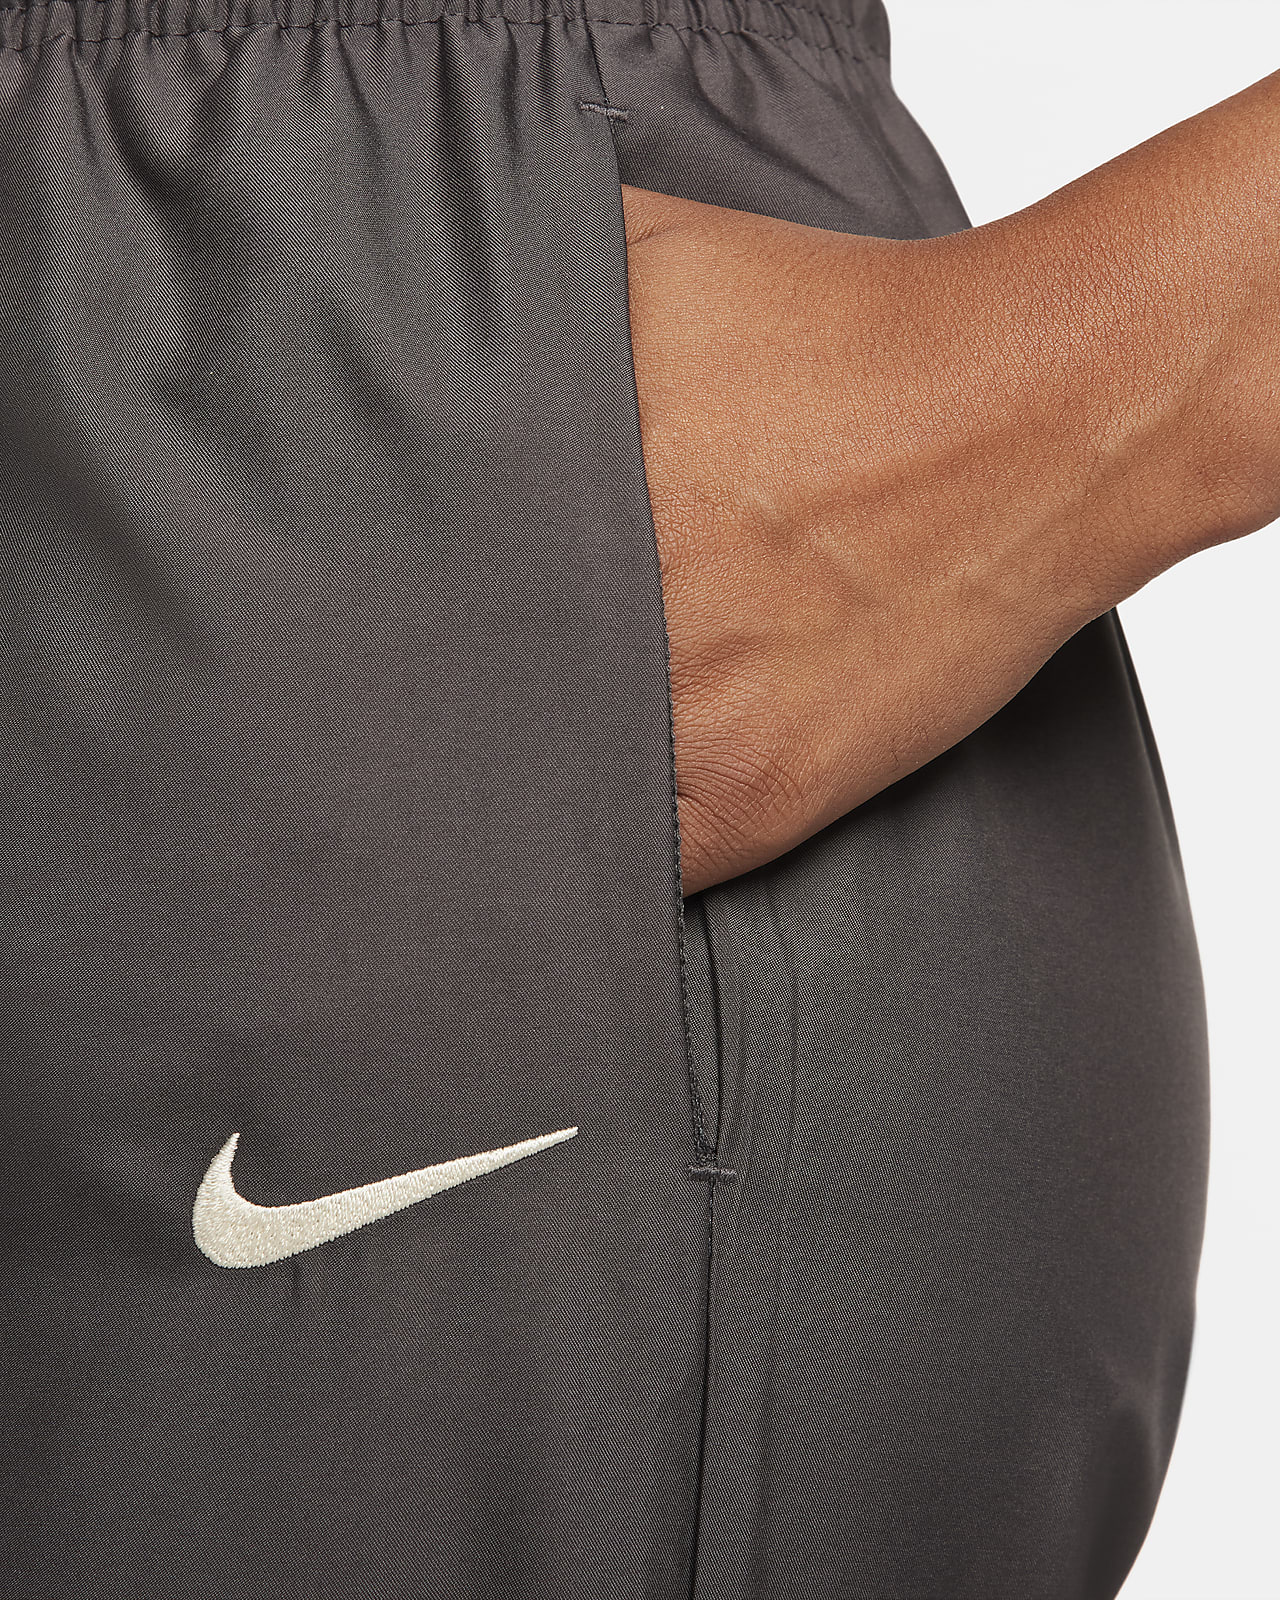 Women's Nike Sportswear Air Max Day Woven Jogger Pants